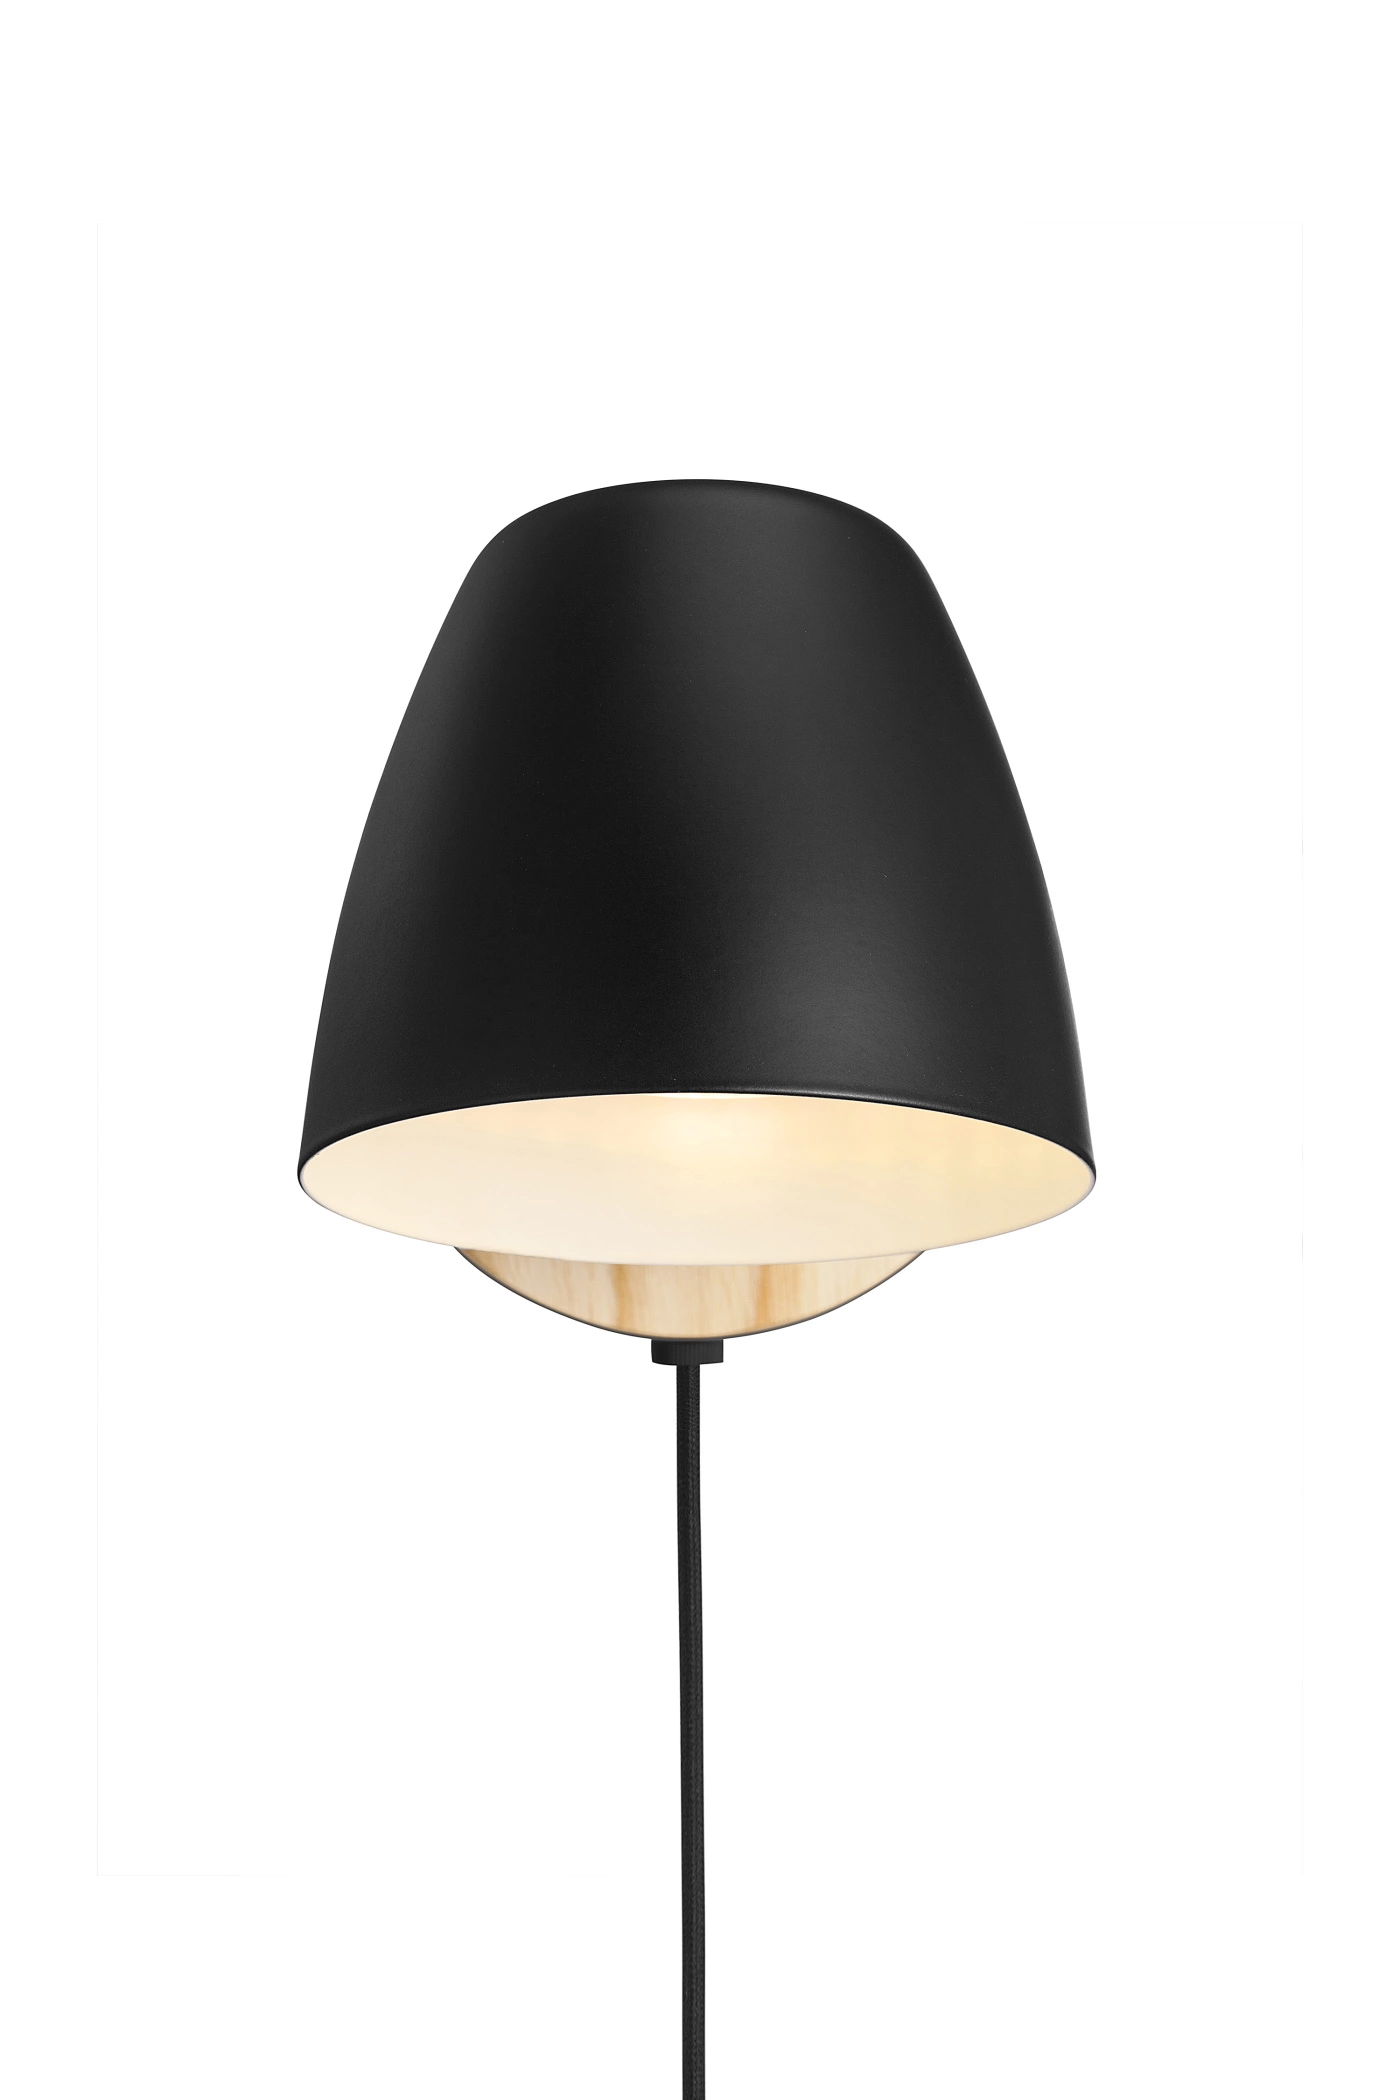   
                        
                        Бра NORDLUX (Дания) 51333    
                         в стиле Кантри, Лофт.  
                        Тип источника света: светодиодная лампа, сменная.                                                 Цвета плафонов и подвесок: Черный.                         Материал: Металл.                          фото 3